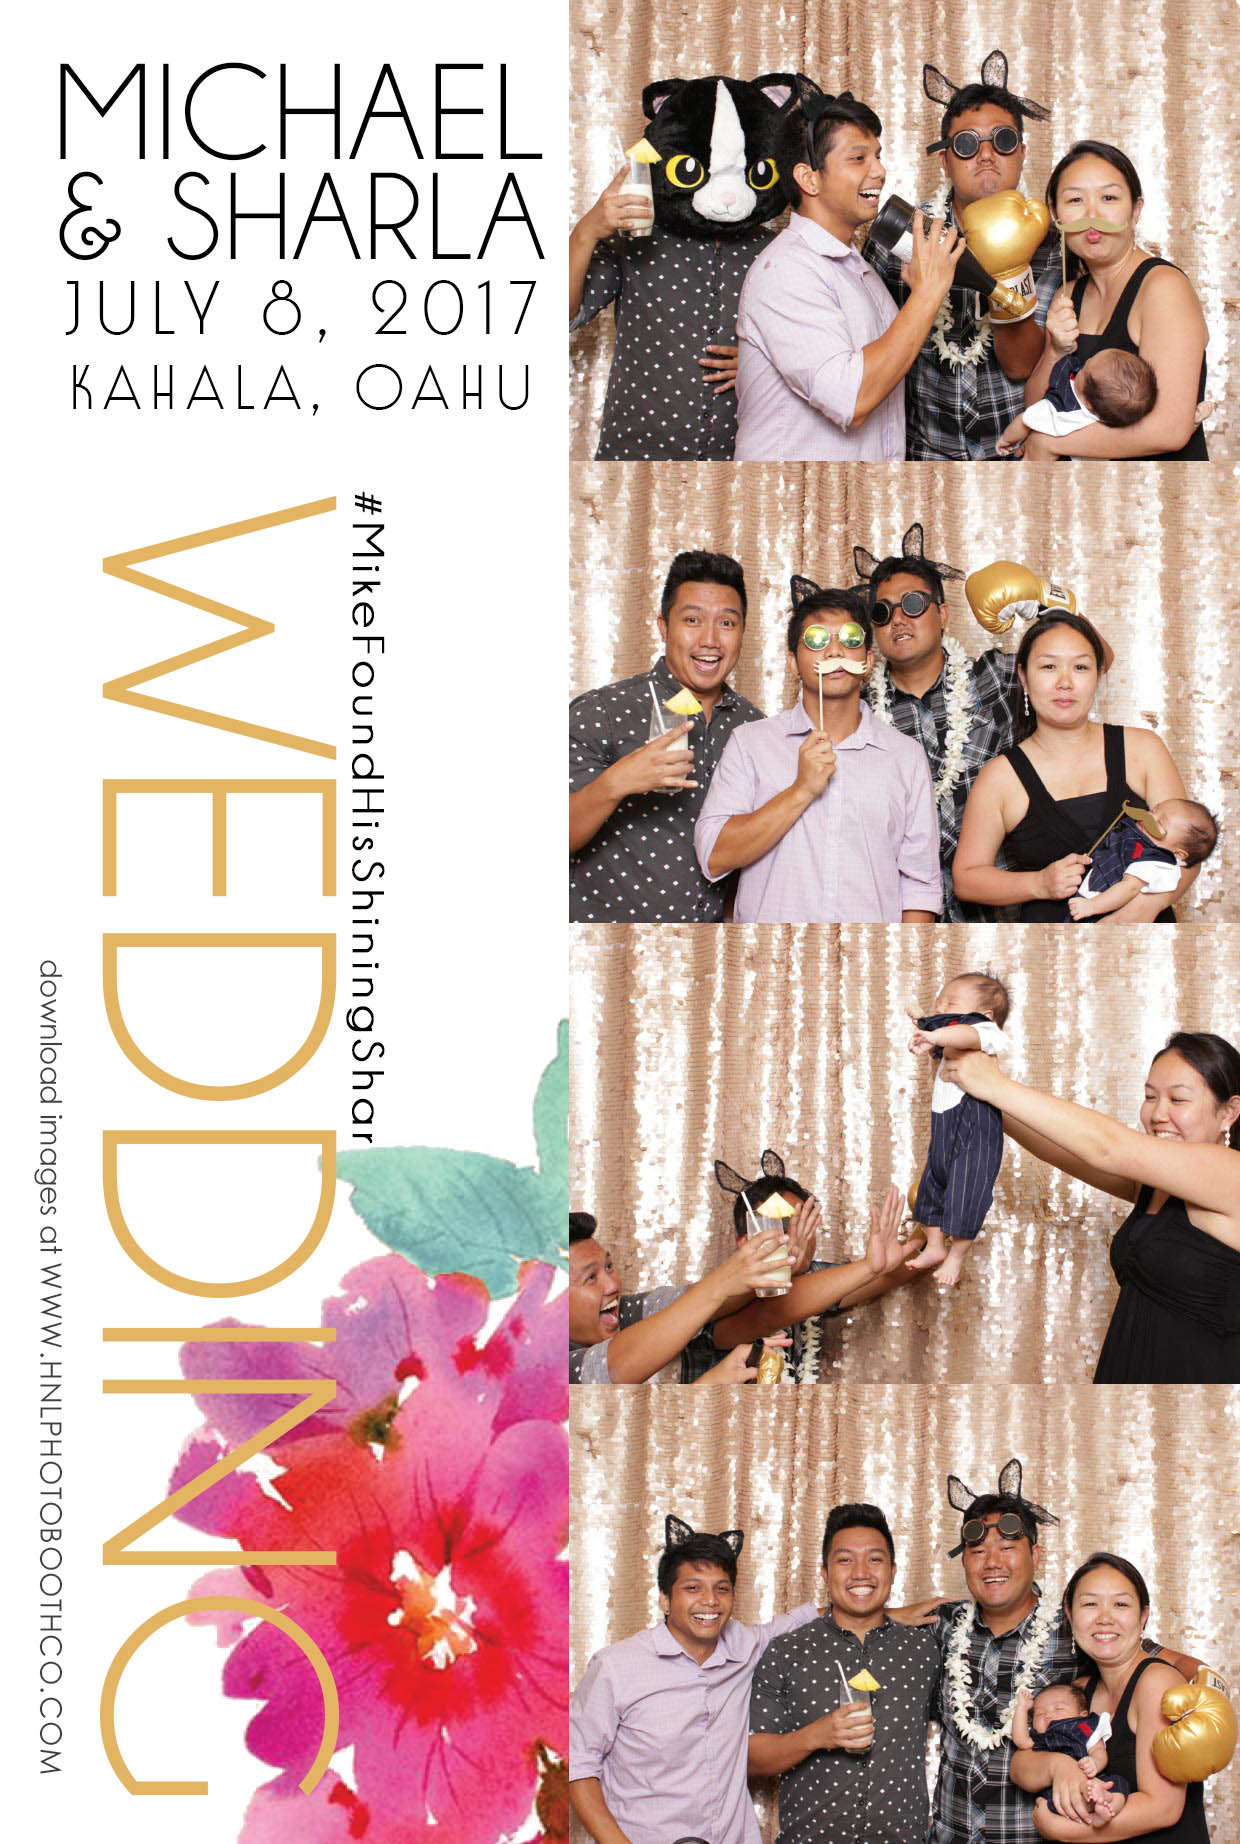 Sharla and Michael Wedding Maile Ballroom and Foyer Kahala Hotel and Resort Oahu Hawaii Photo Booth-9.jpg